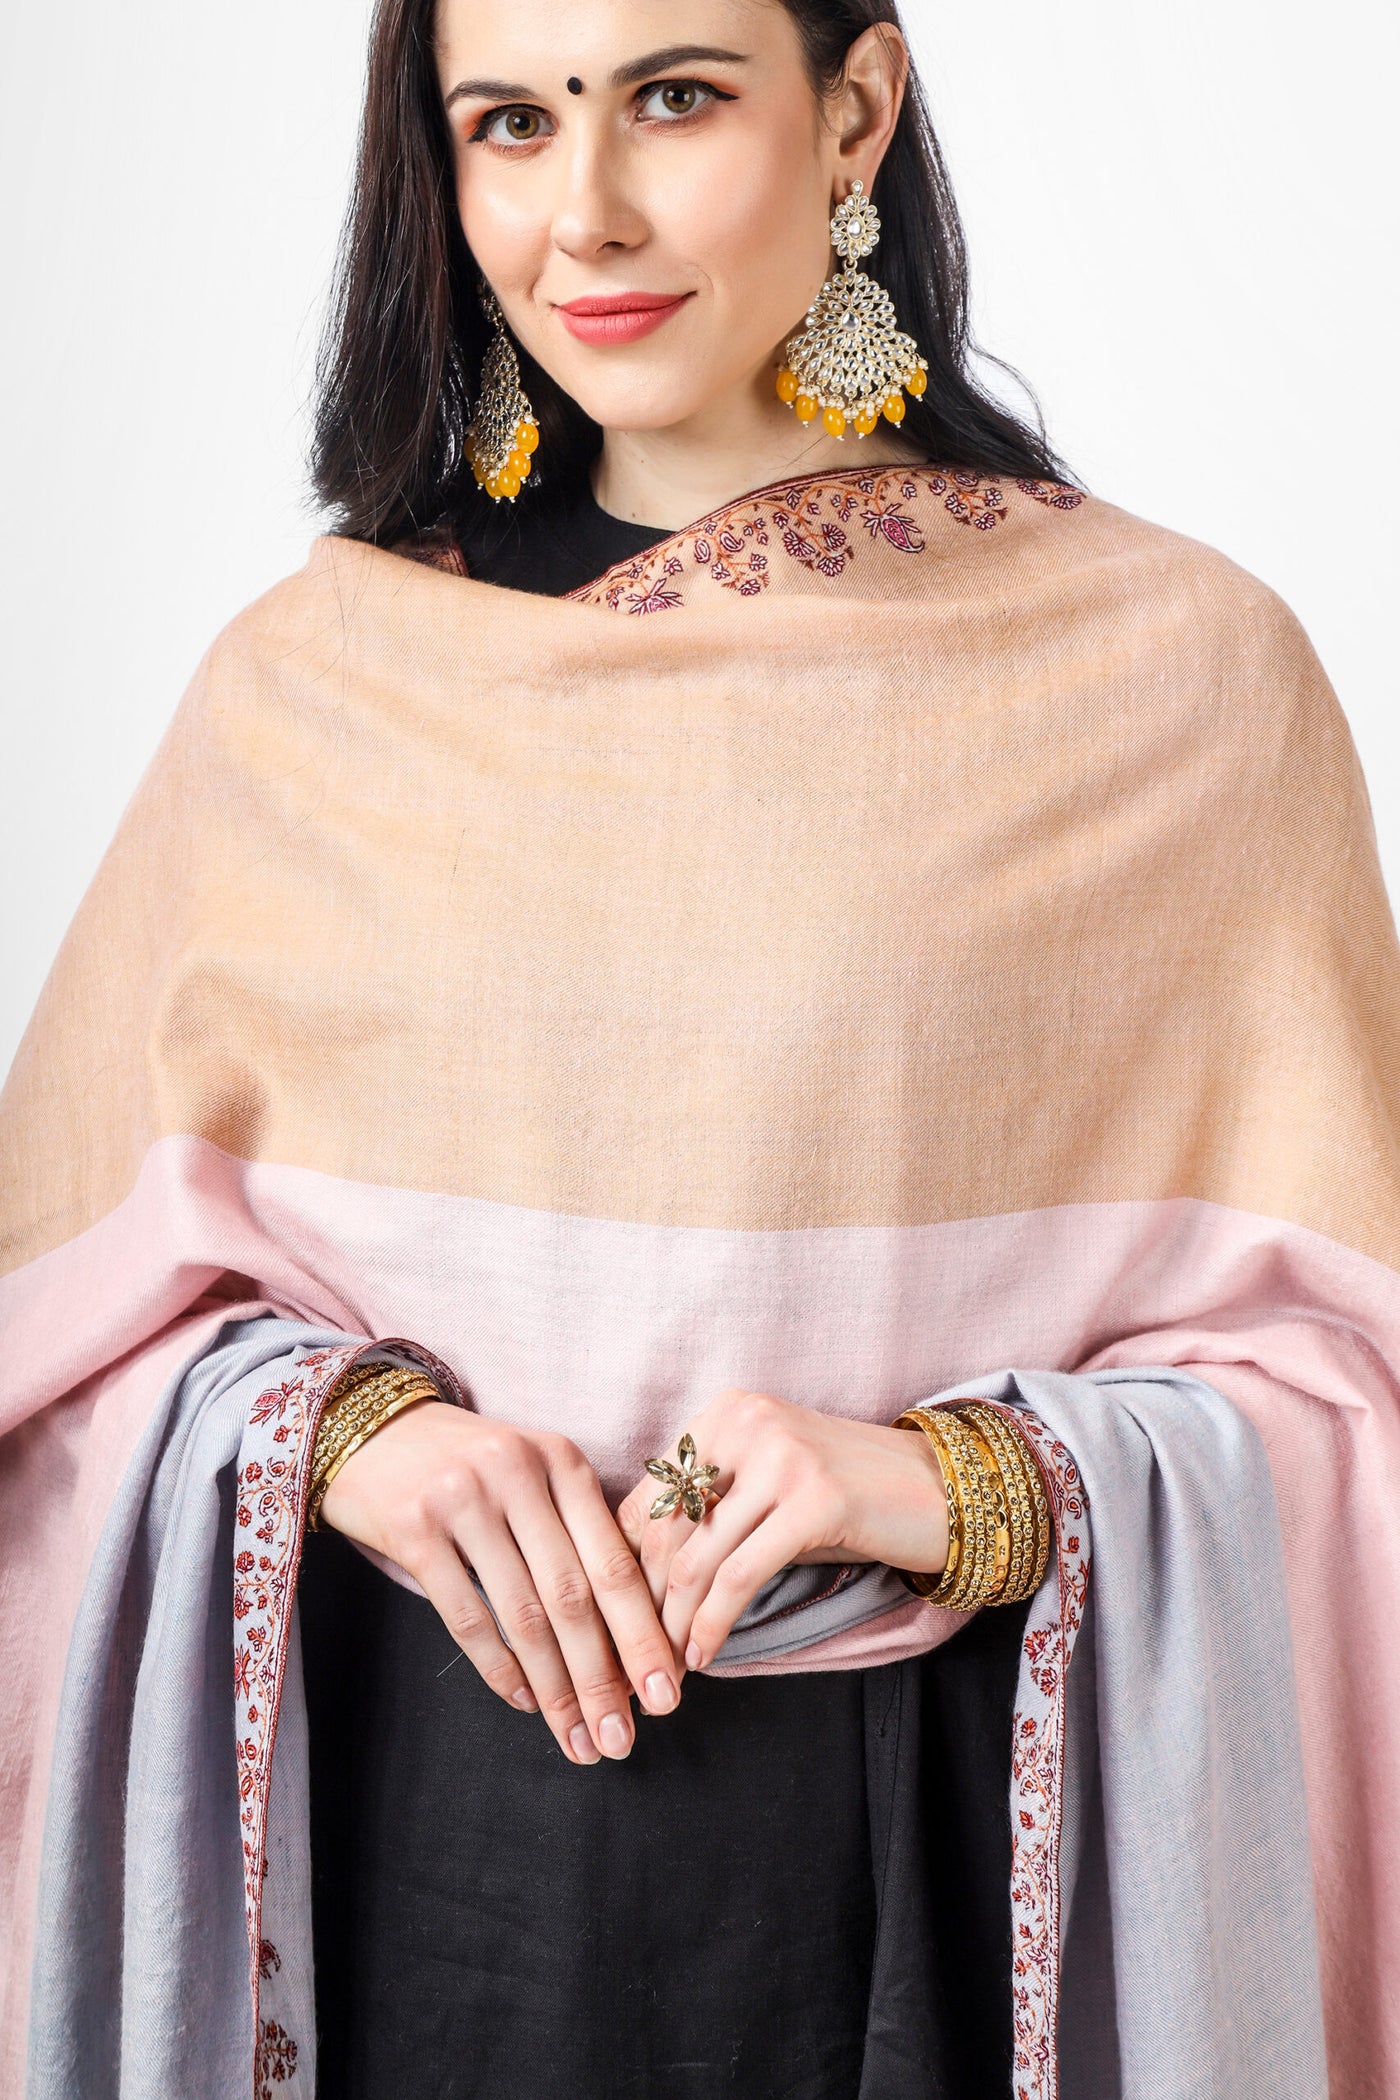 Three Colour Pashmina Paladaar sozni shawl